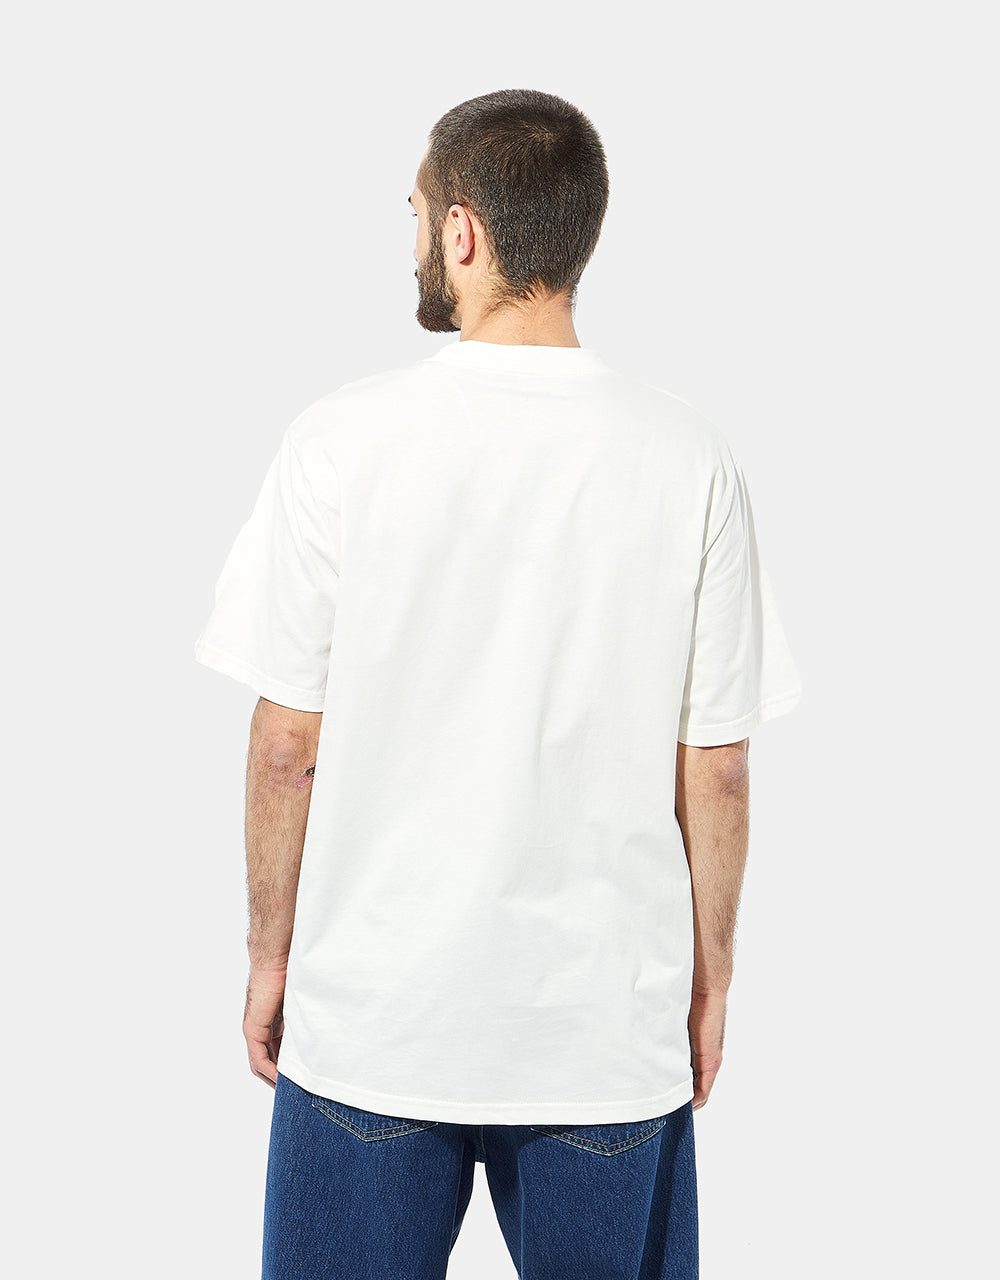 Carhartt WIP S/S United T-Shirt - Wax